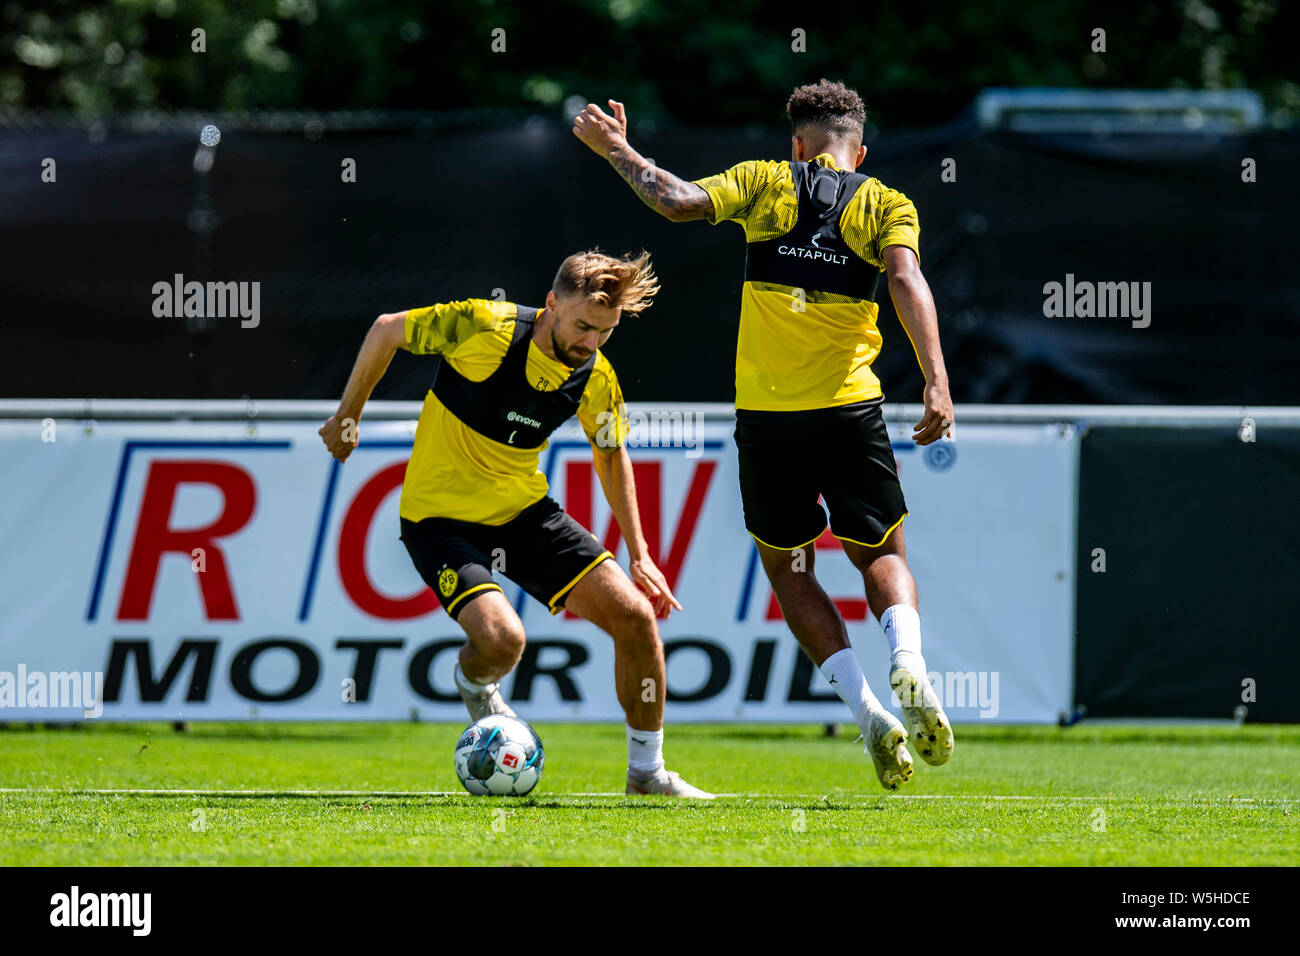 Bad Ragaz, Switzerland. 29th July, 2019. Soccer, training camp Borussia:  Dortmund Dortmund's Marcel Schmelzer (l) and Dortmund's Jadon Sancho fight  for the ball. Credit: David Inderlied/dpa/Alamy Live News Stock Photo -  Alamy